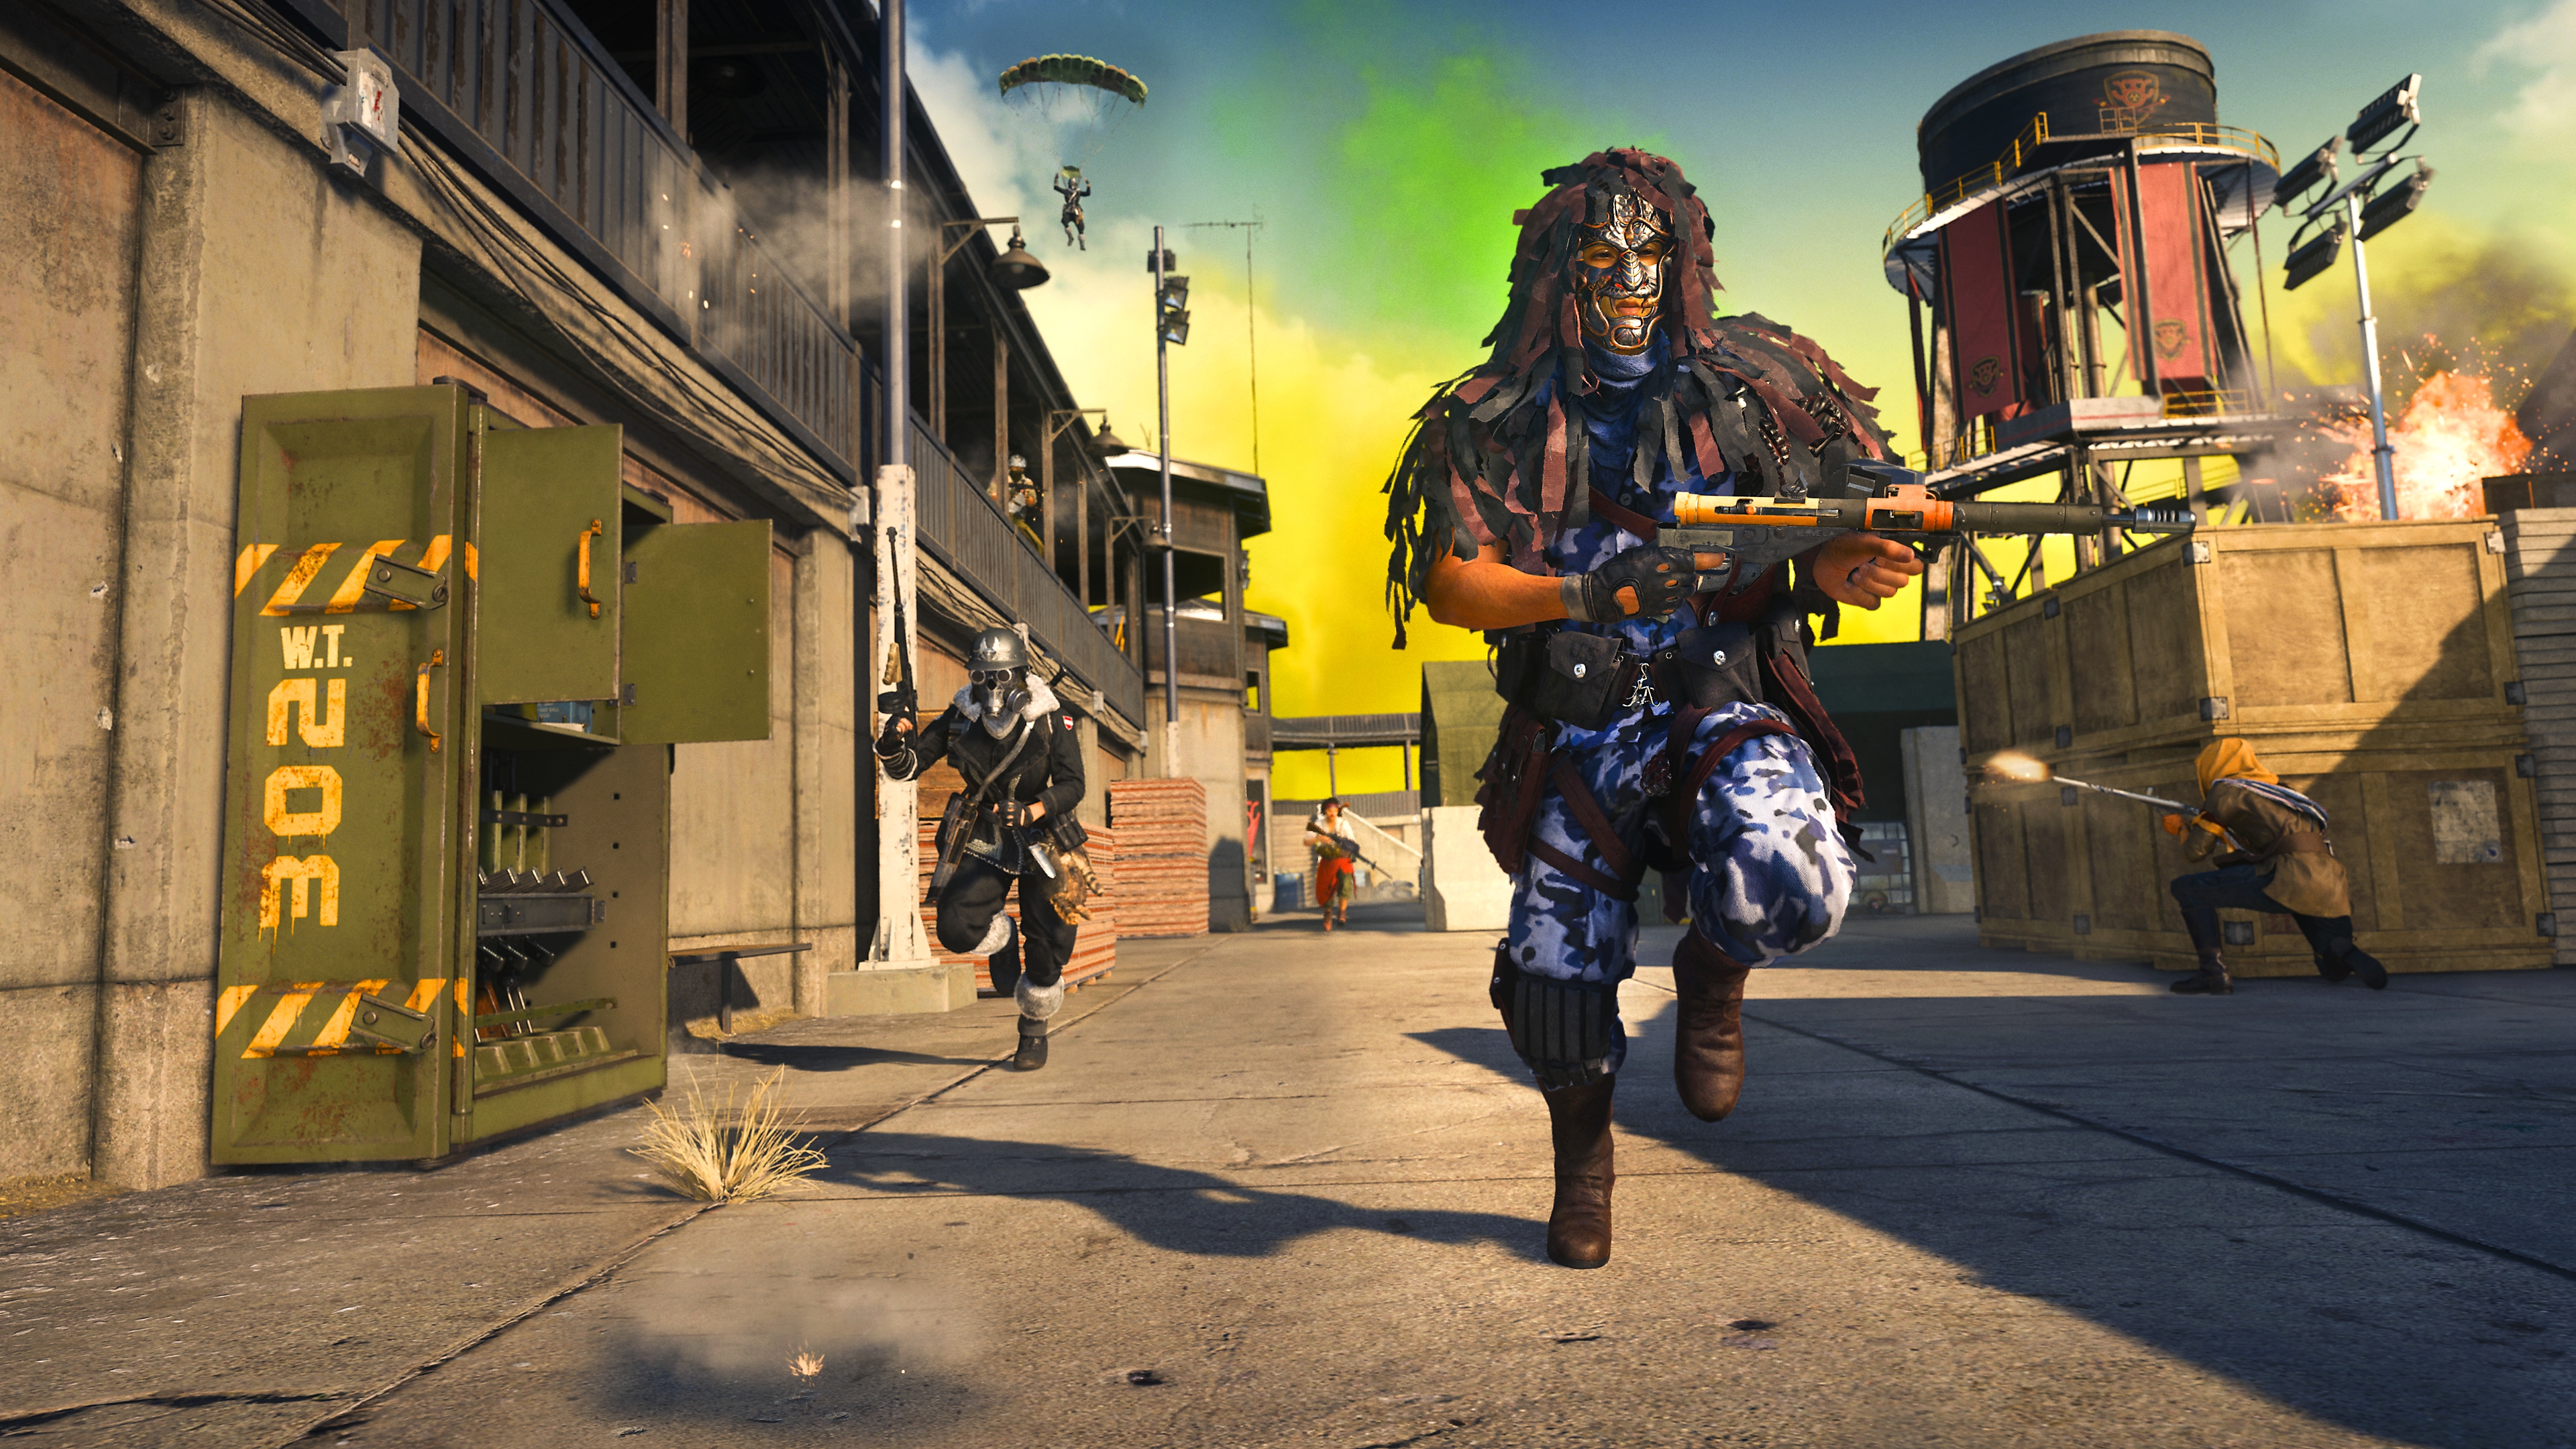 Call of Duty Warzone – снимок экрана, на котором два игрока убегают от желтого облака ядовитого дыма